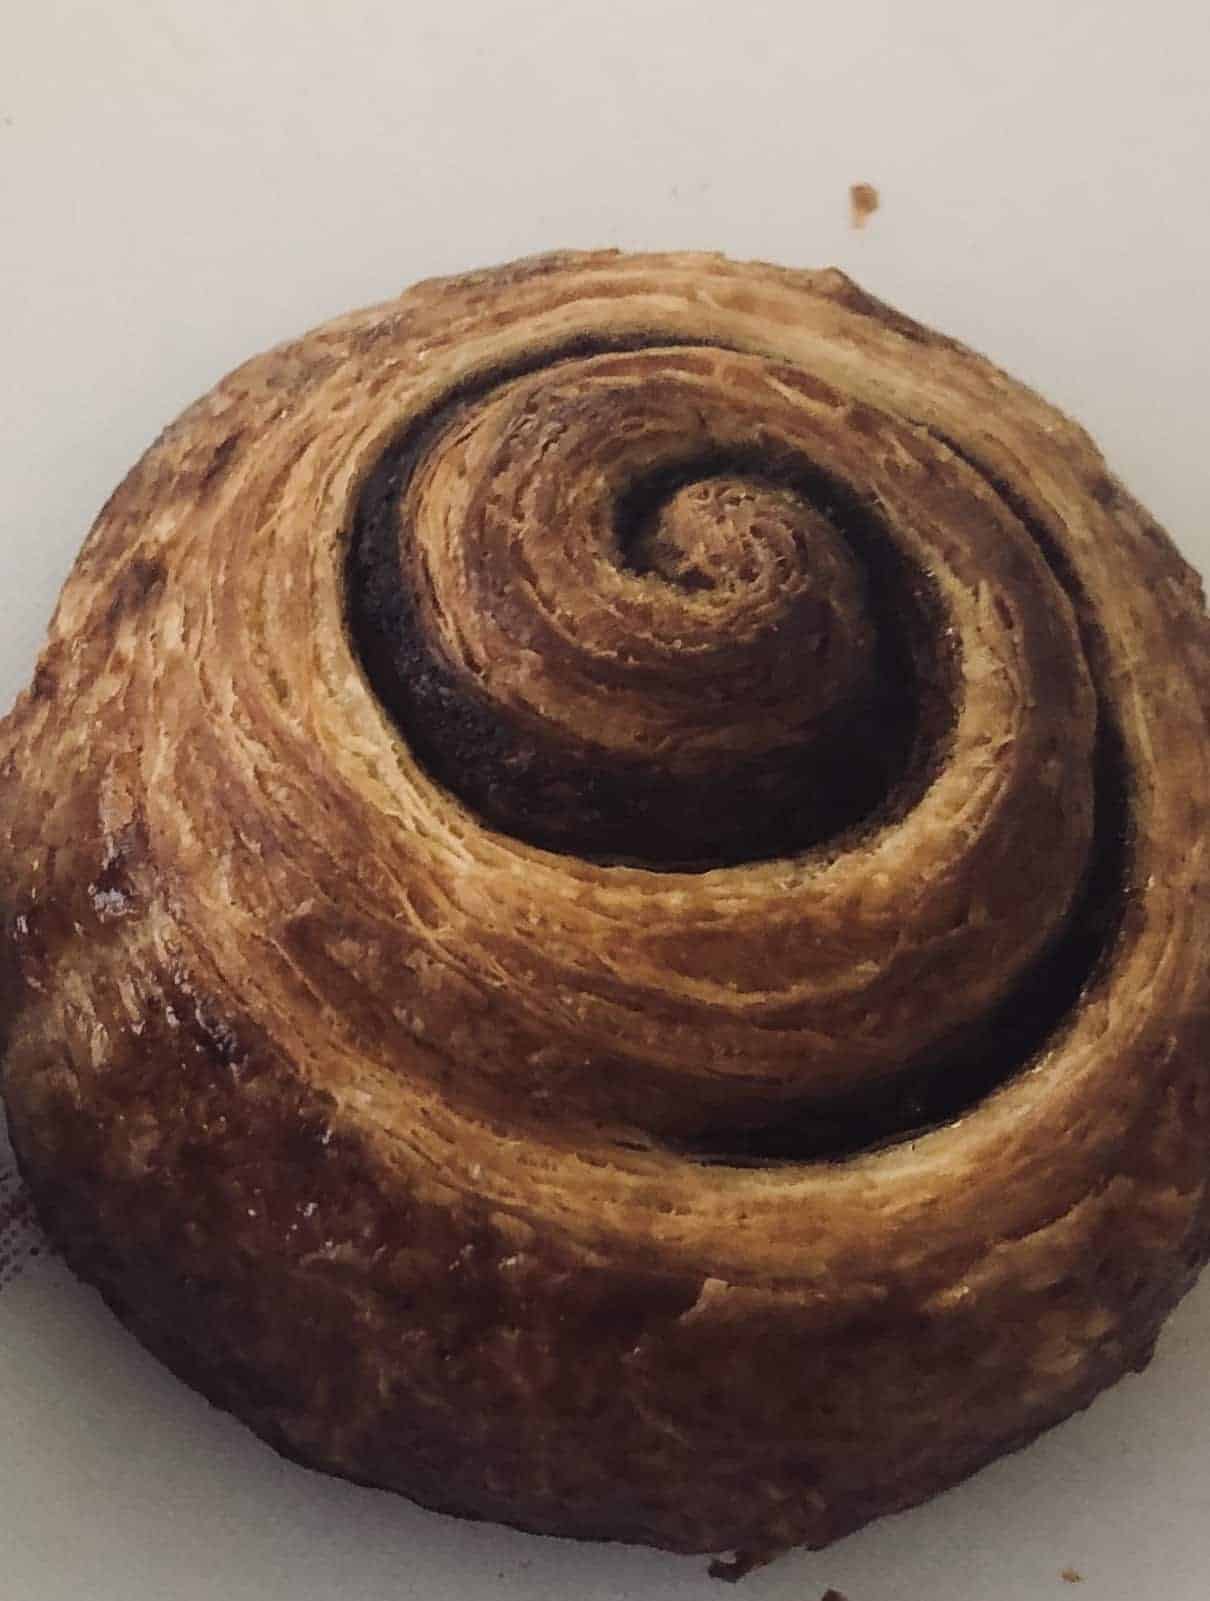 Cinnamon croissant swirl (2 pcs)